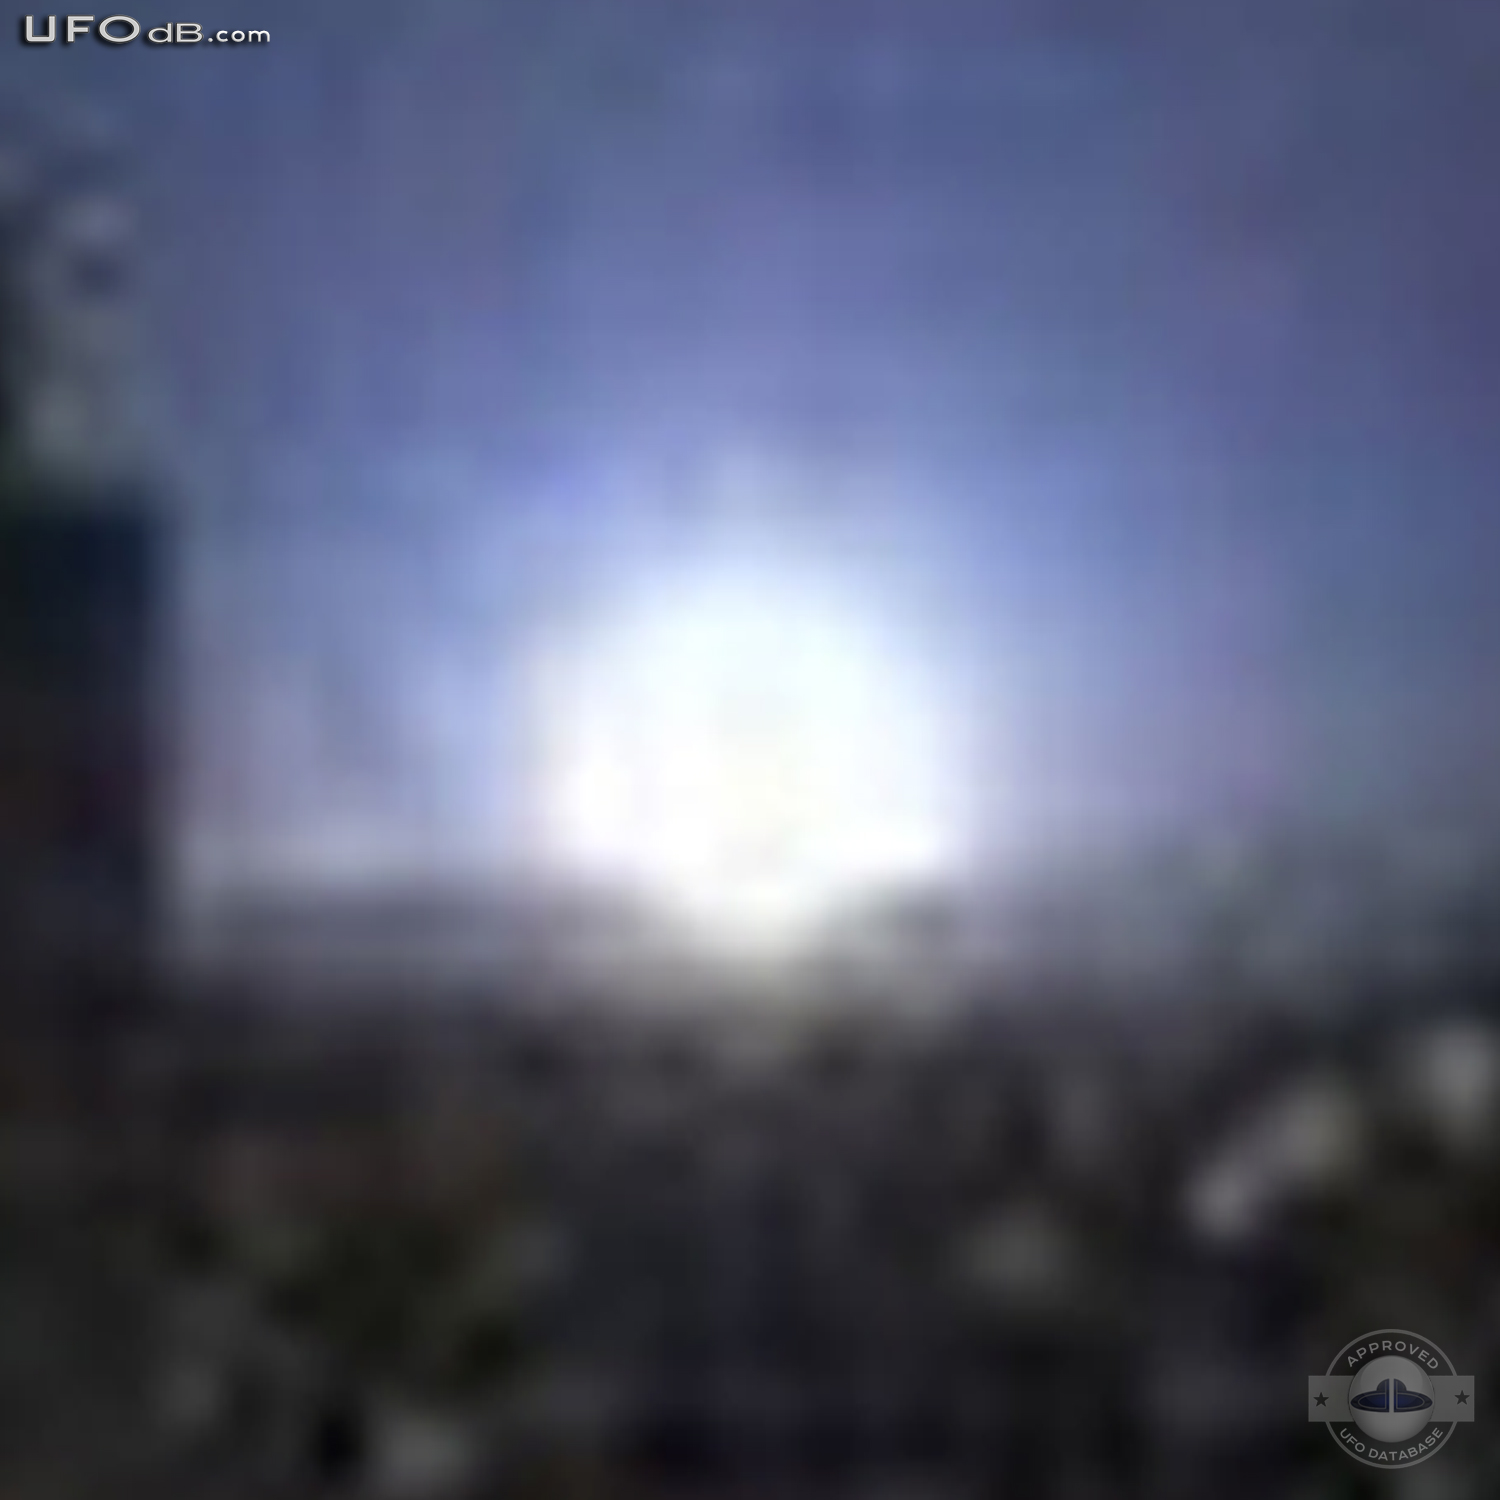 NHK TV News show earthquake strange UFO light | Japan | April 7 2011 UFO Picture #293-5